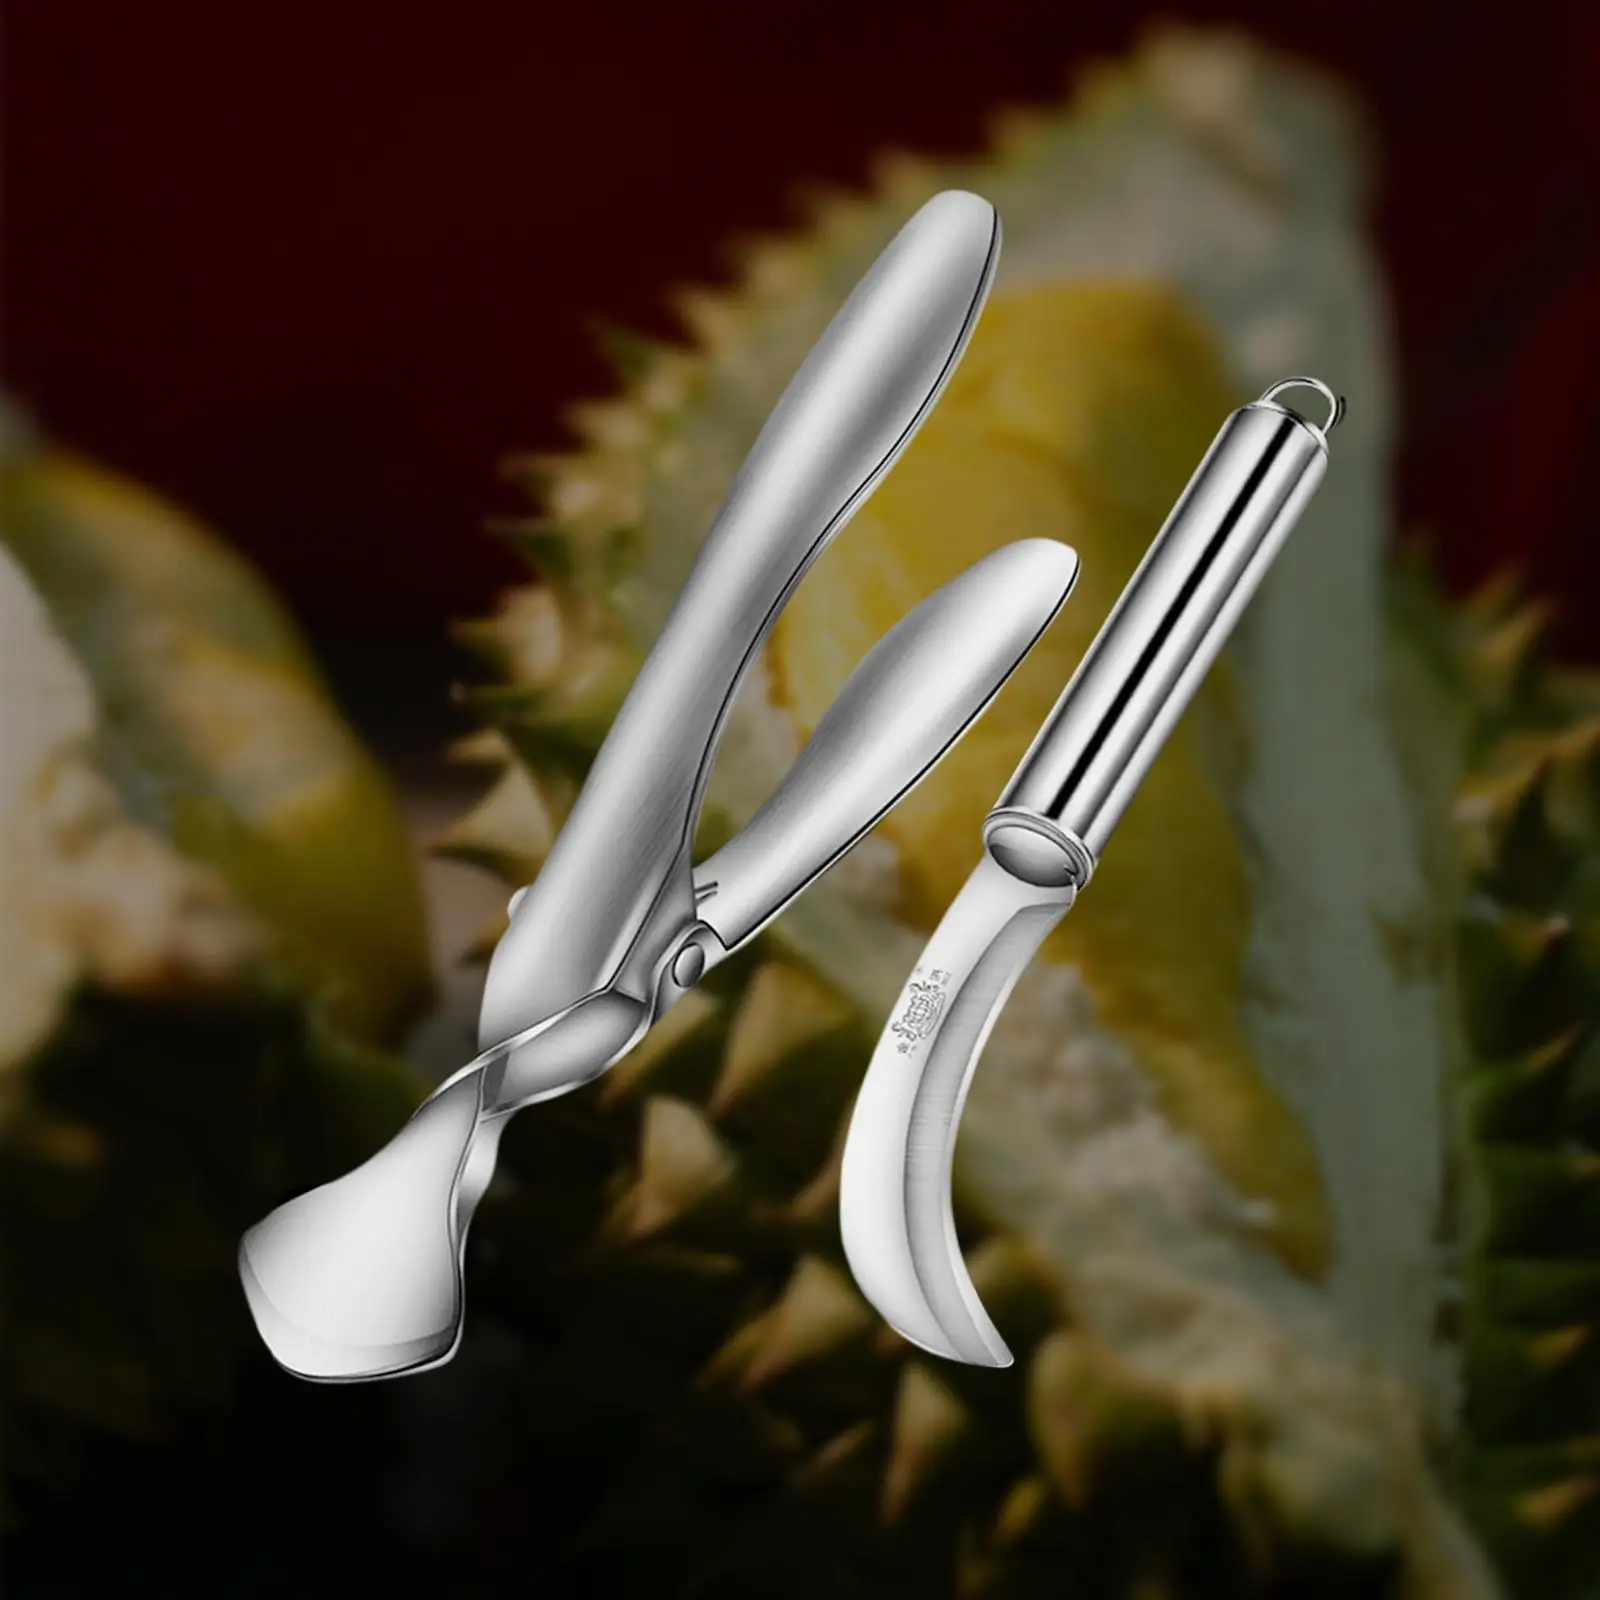 Fruit Durian Shell Opener Clip Sheller Clamp for travel party Household